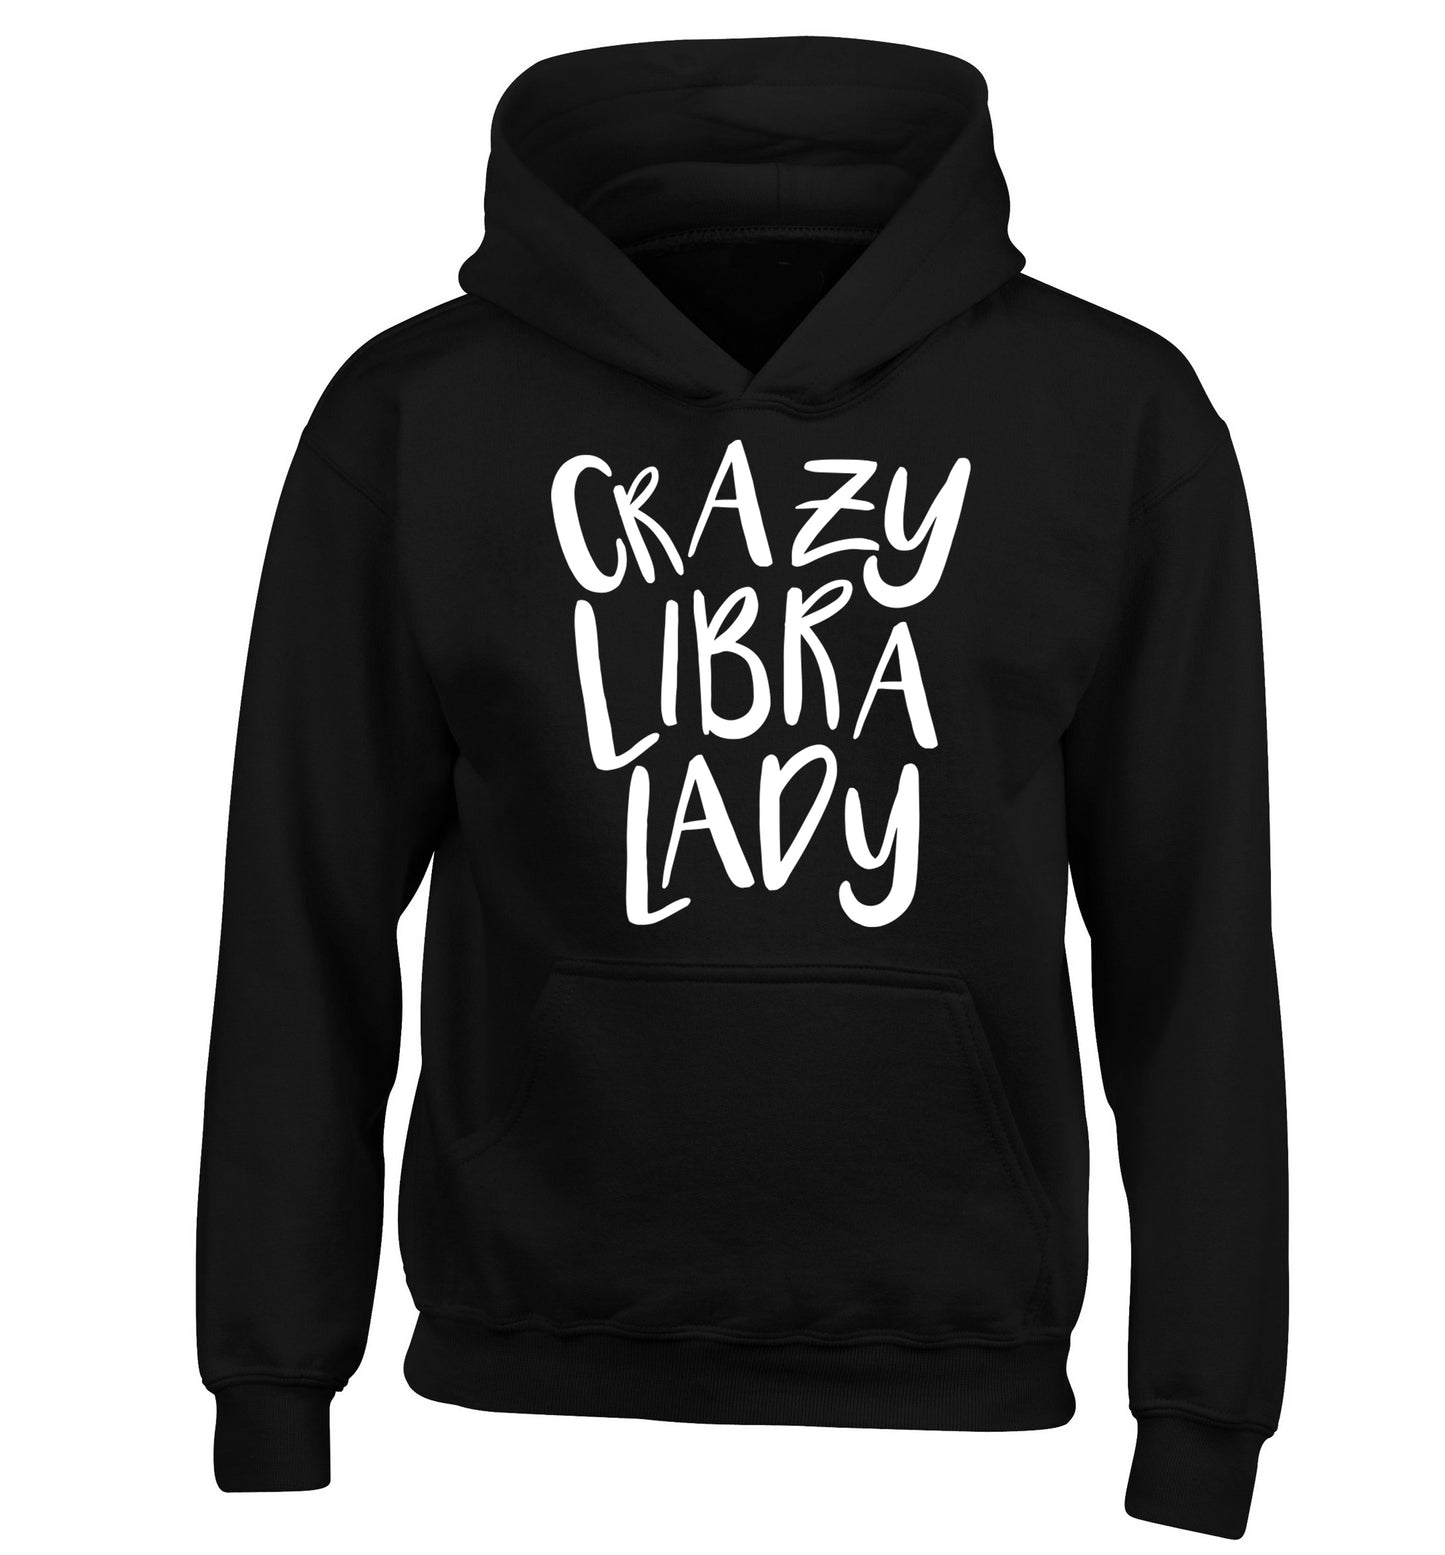 Crazy libra lady children's black hoodie 12-13 Years